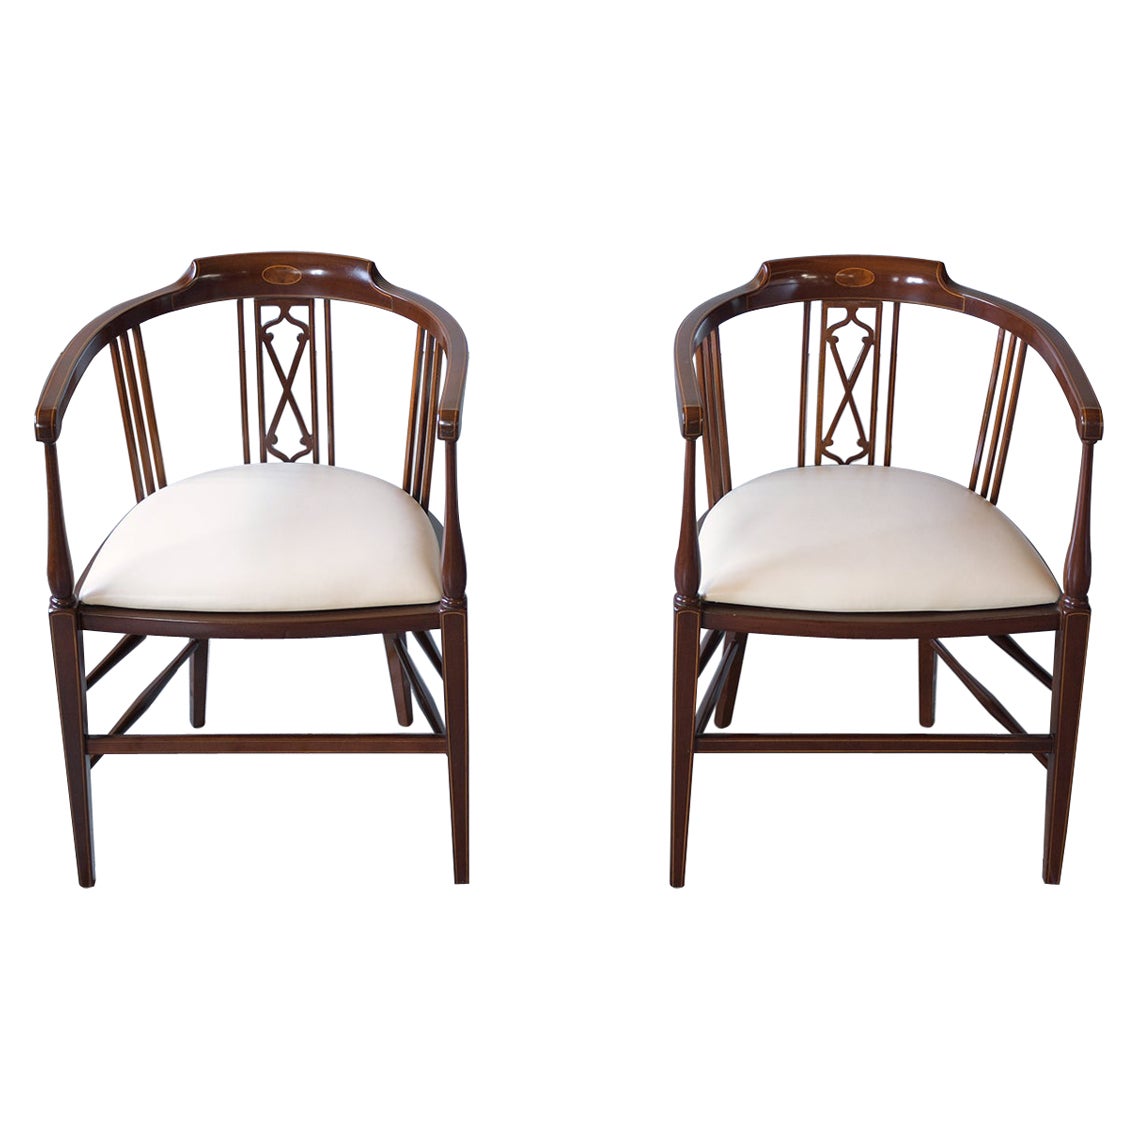 Newly Restored Late 18th-Century Regency Leather Armchairs in Dark Walnut Finish